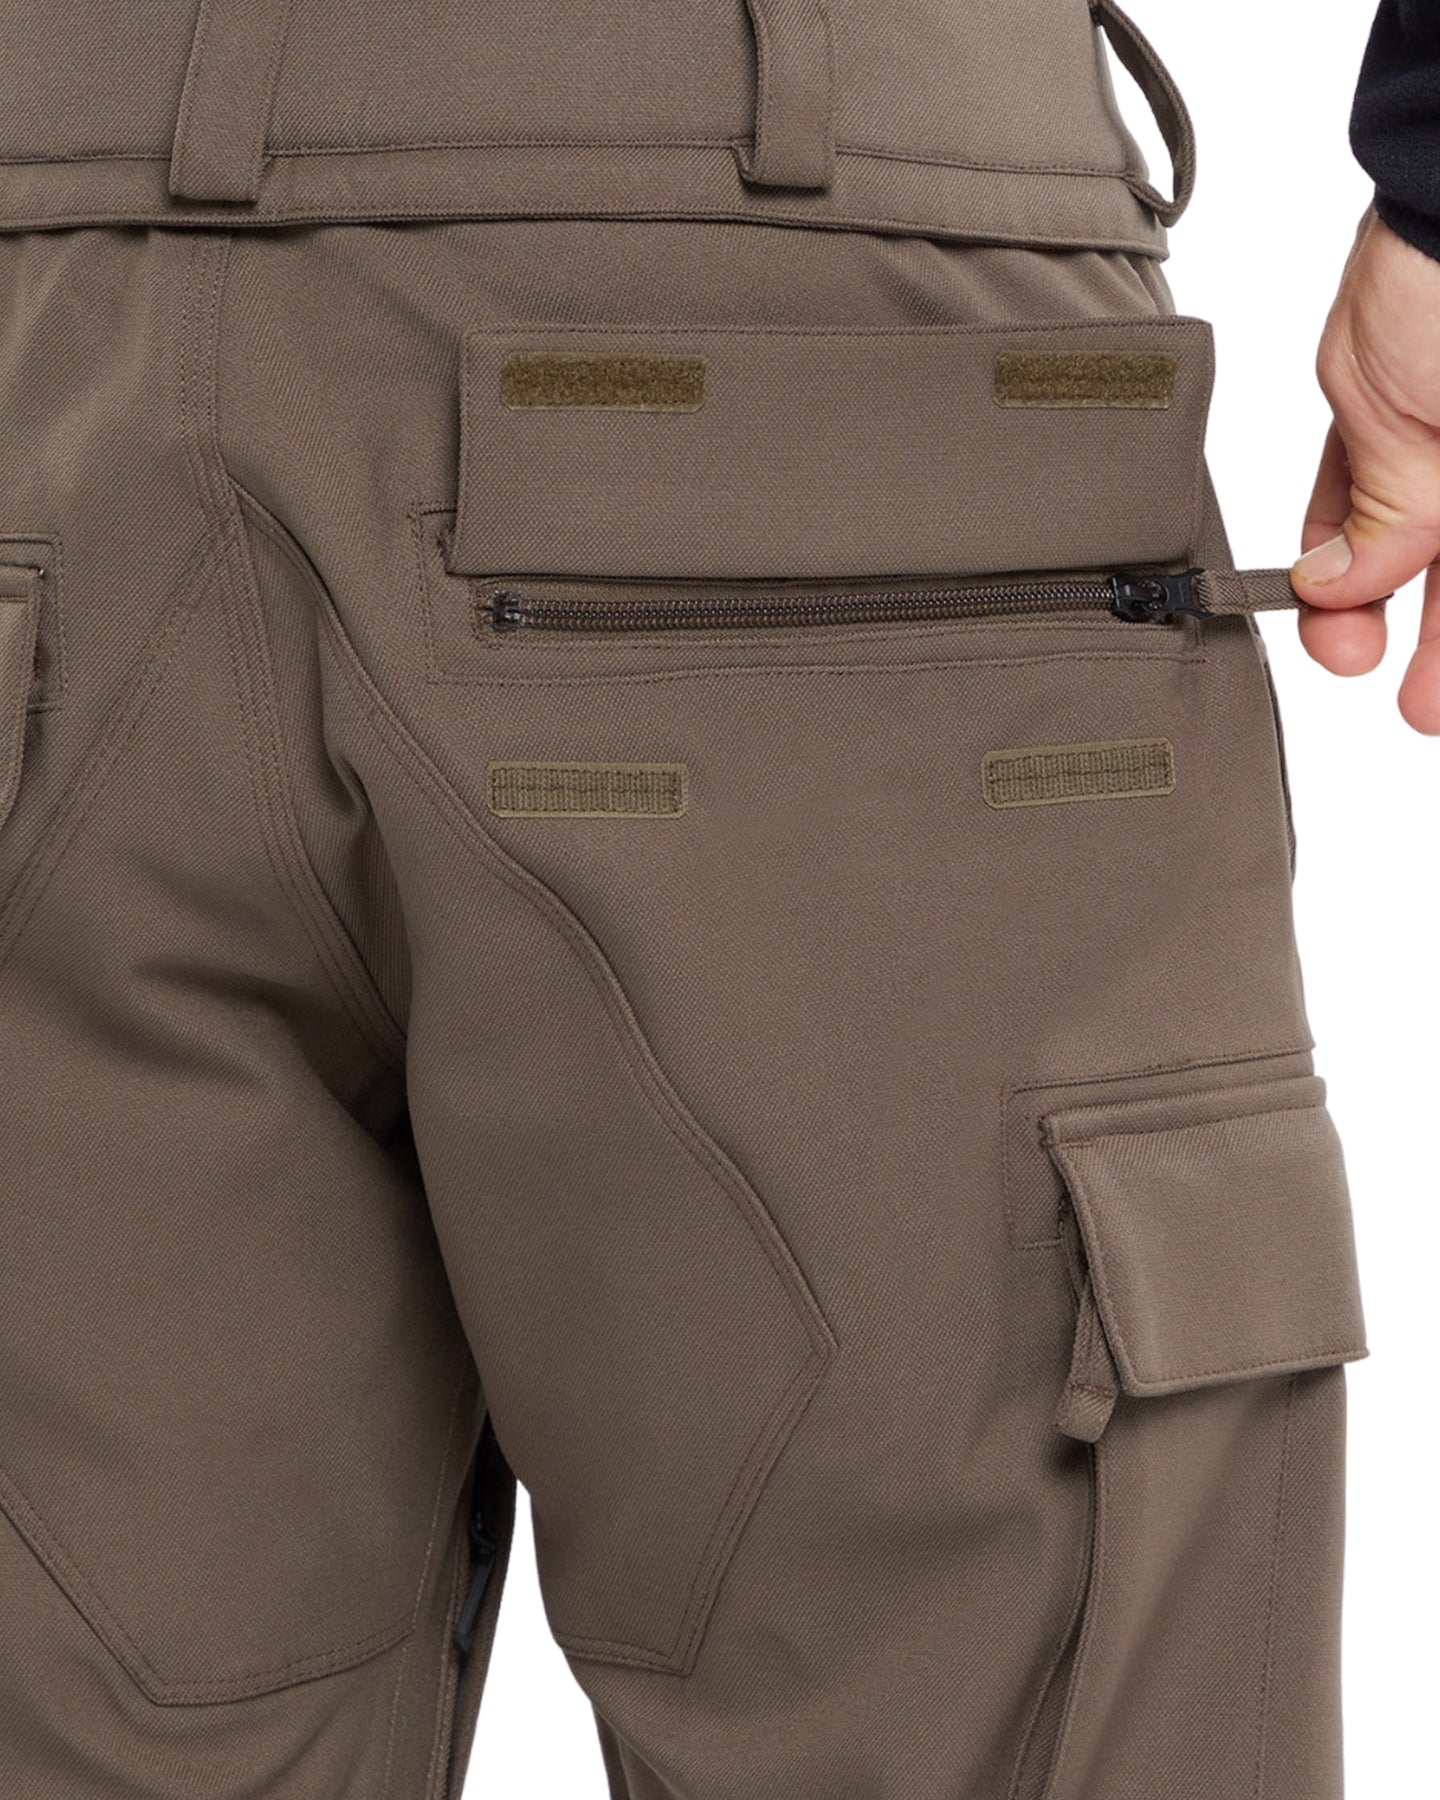 Volcom New Articulated Pant - Teak Men's Snow Pants - SnowSkiersWarehouse